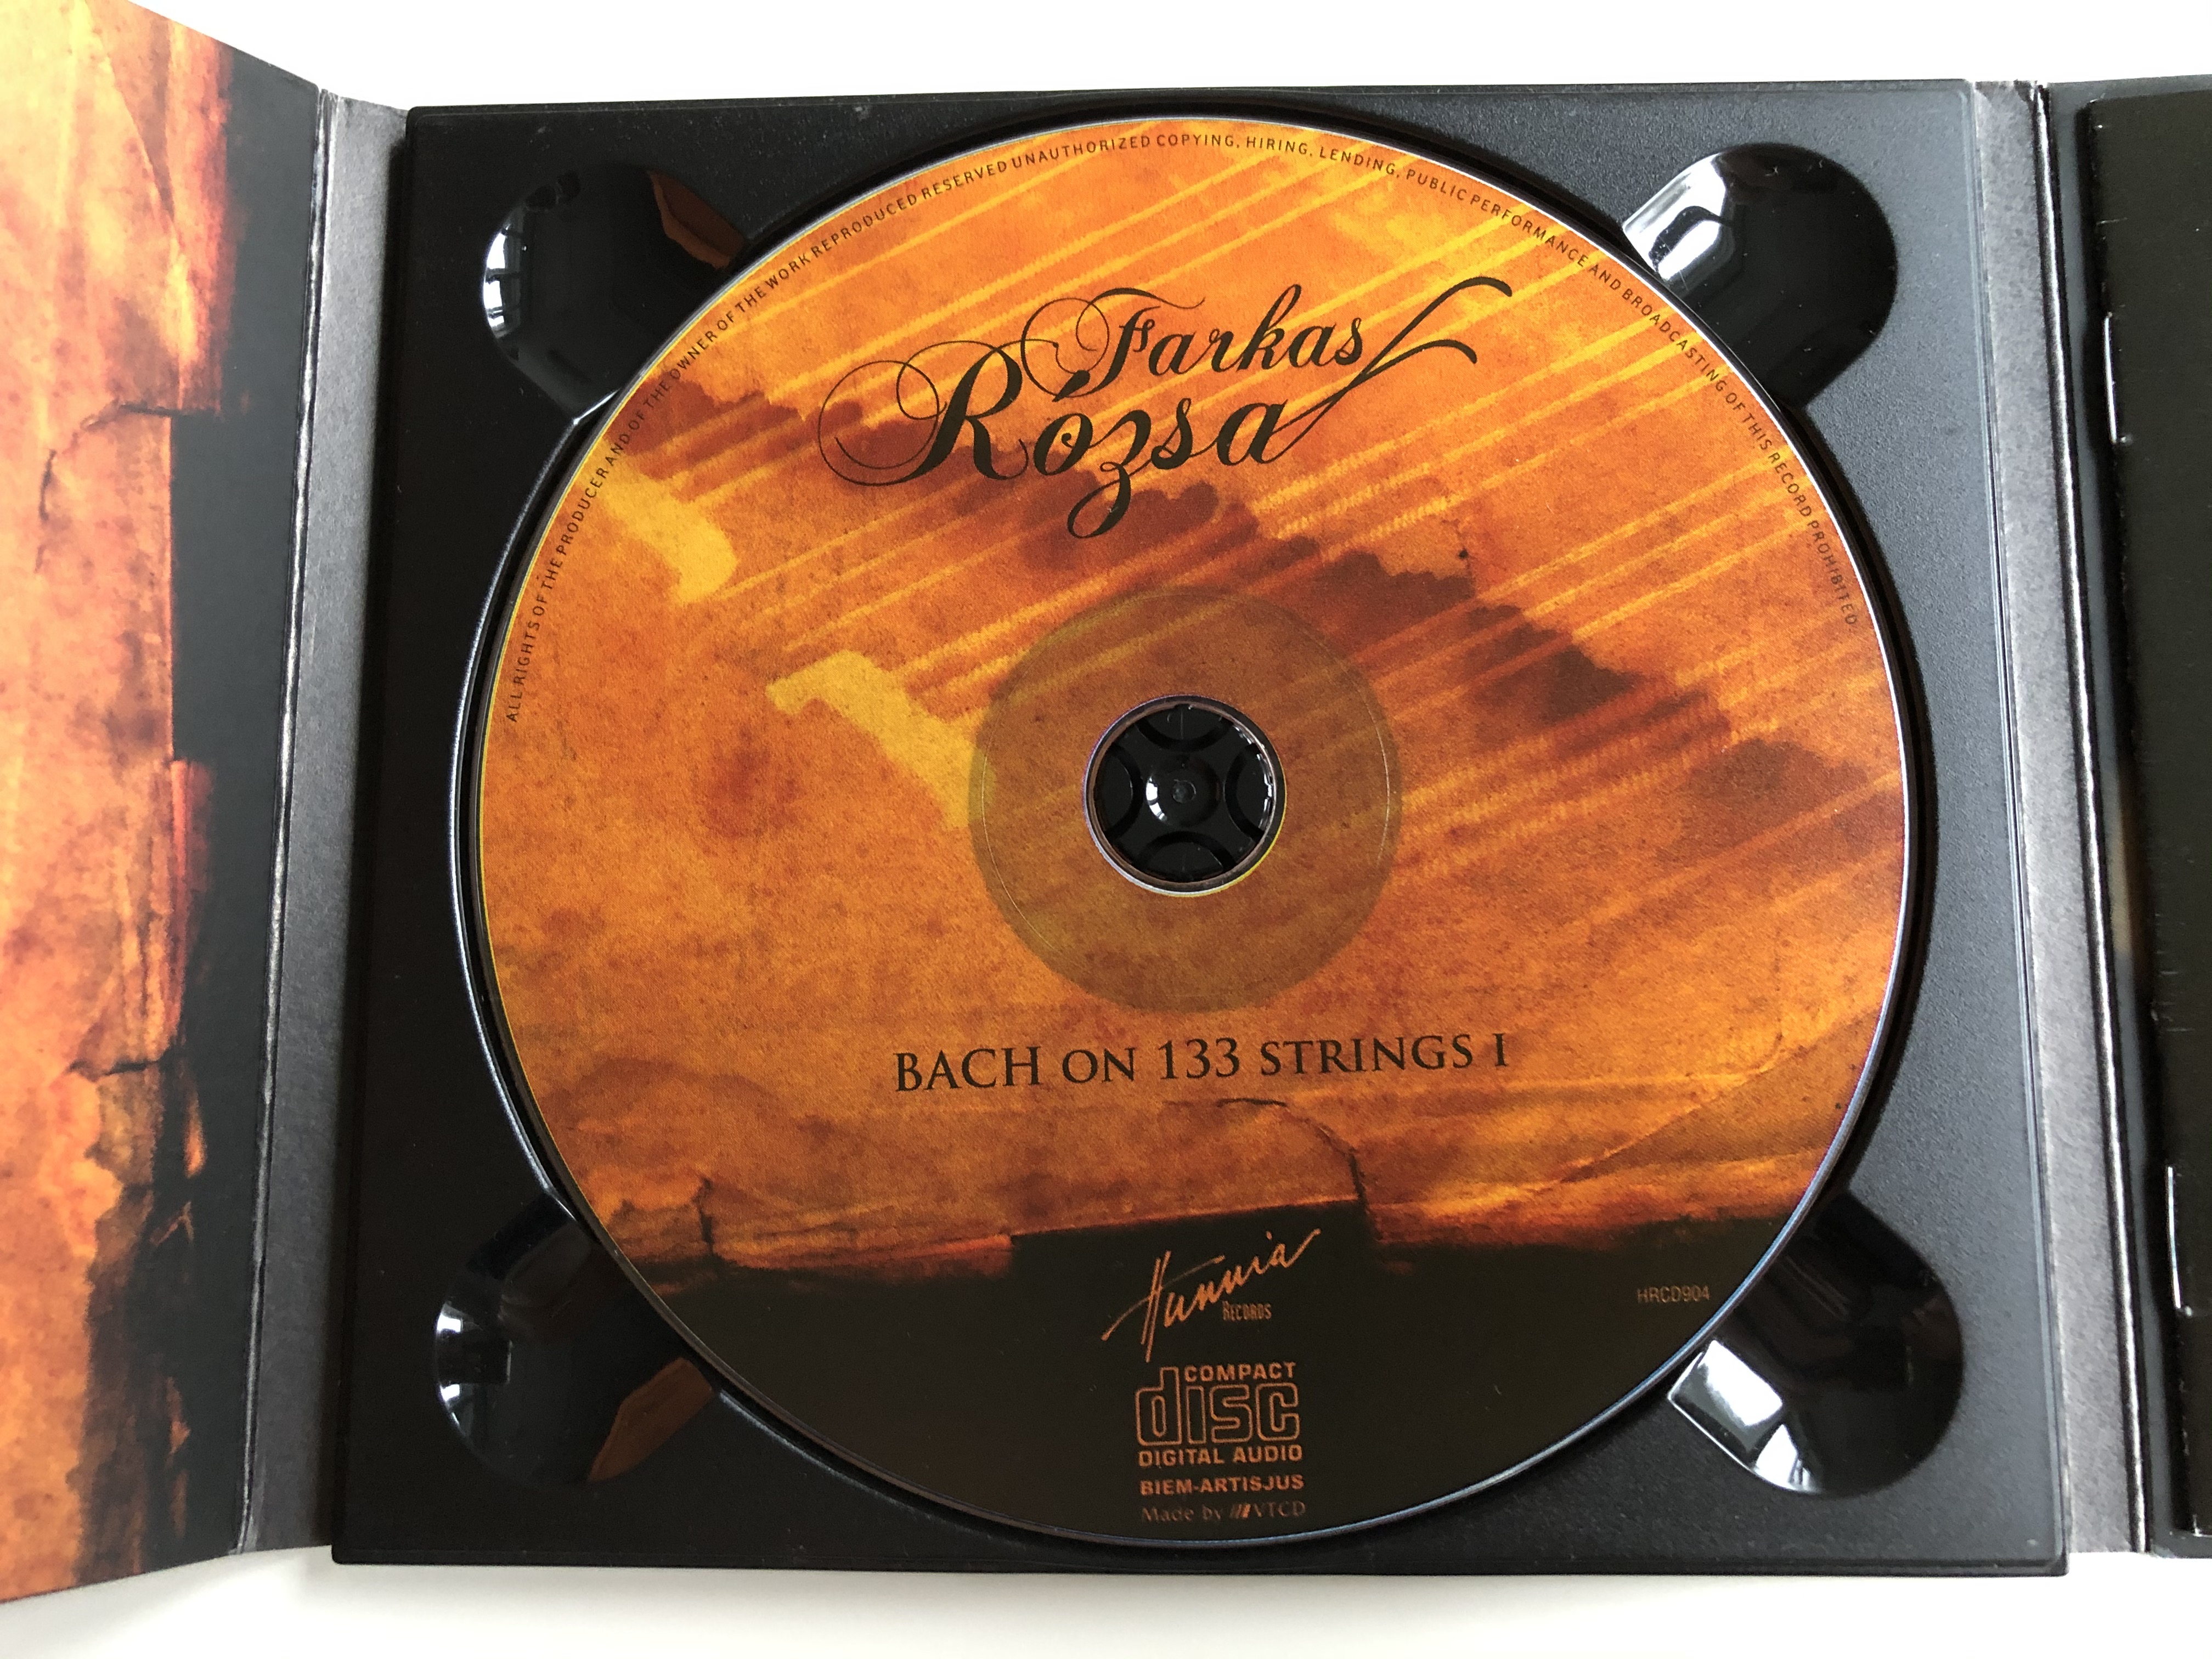 bach-on-133-strings-i-farkas-rozsa-hunnia-records-audio-cd-2009-hrcd904-3-.jpg